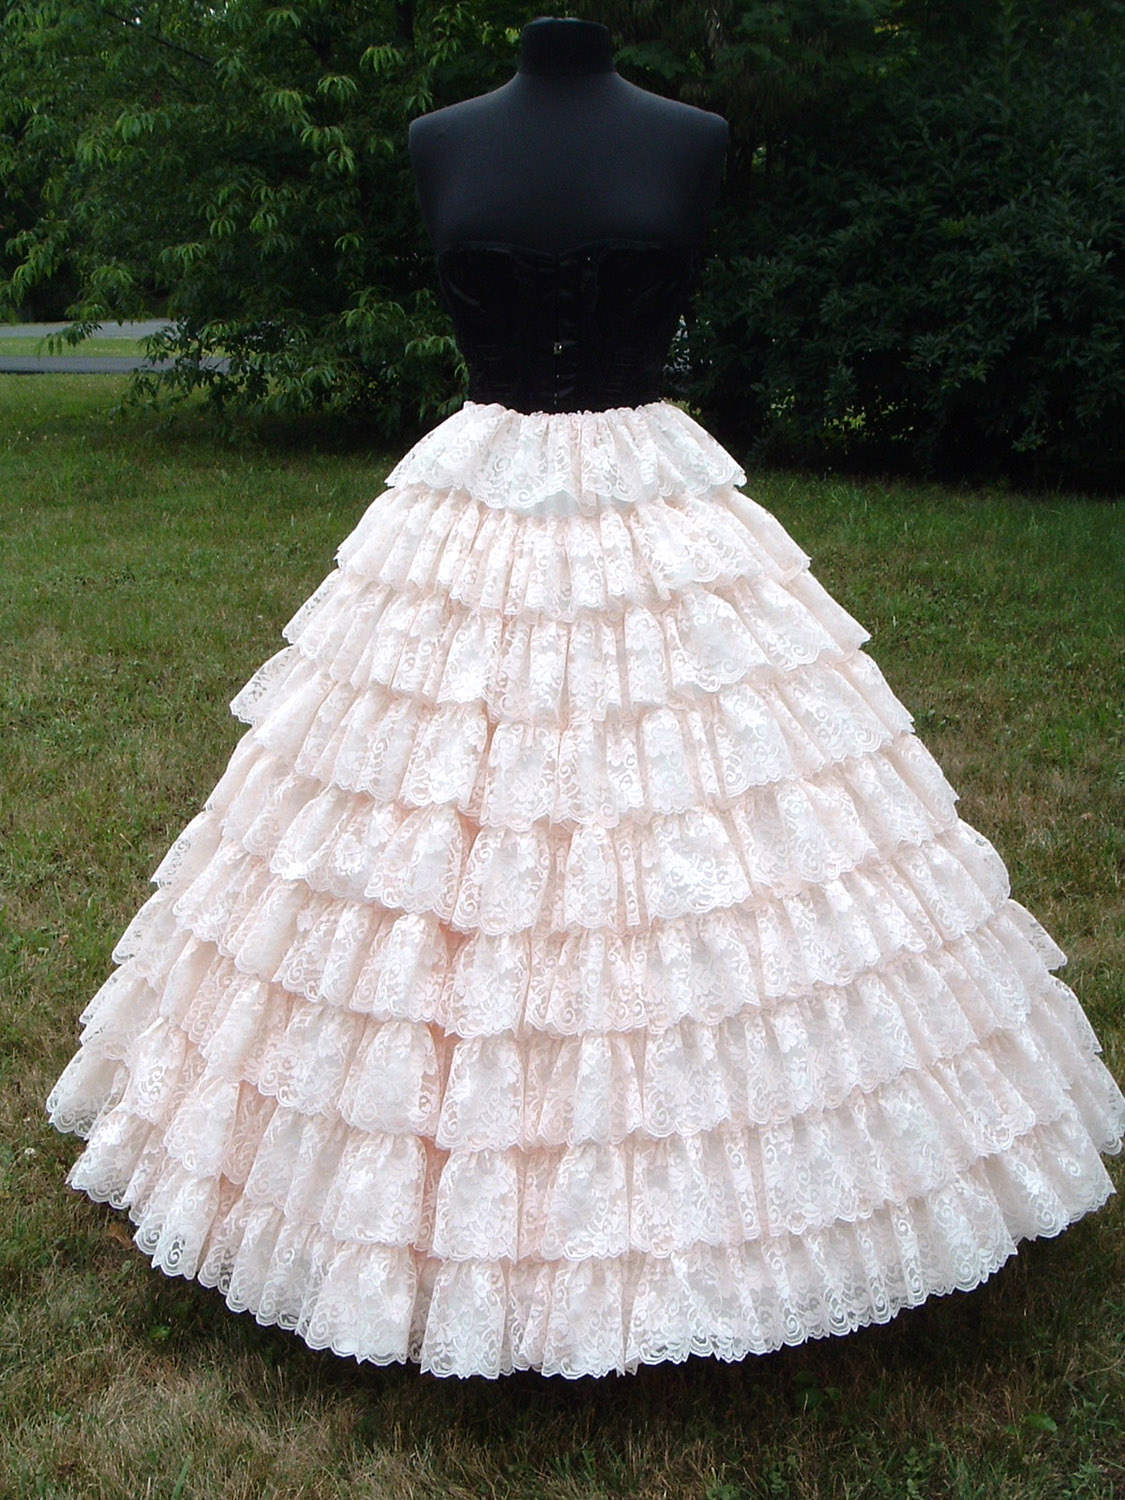 Lace-petticoat-front.jpg.jpeg